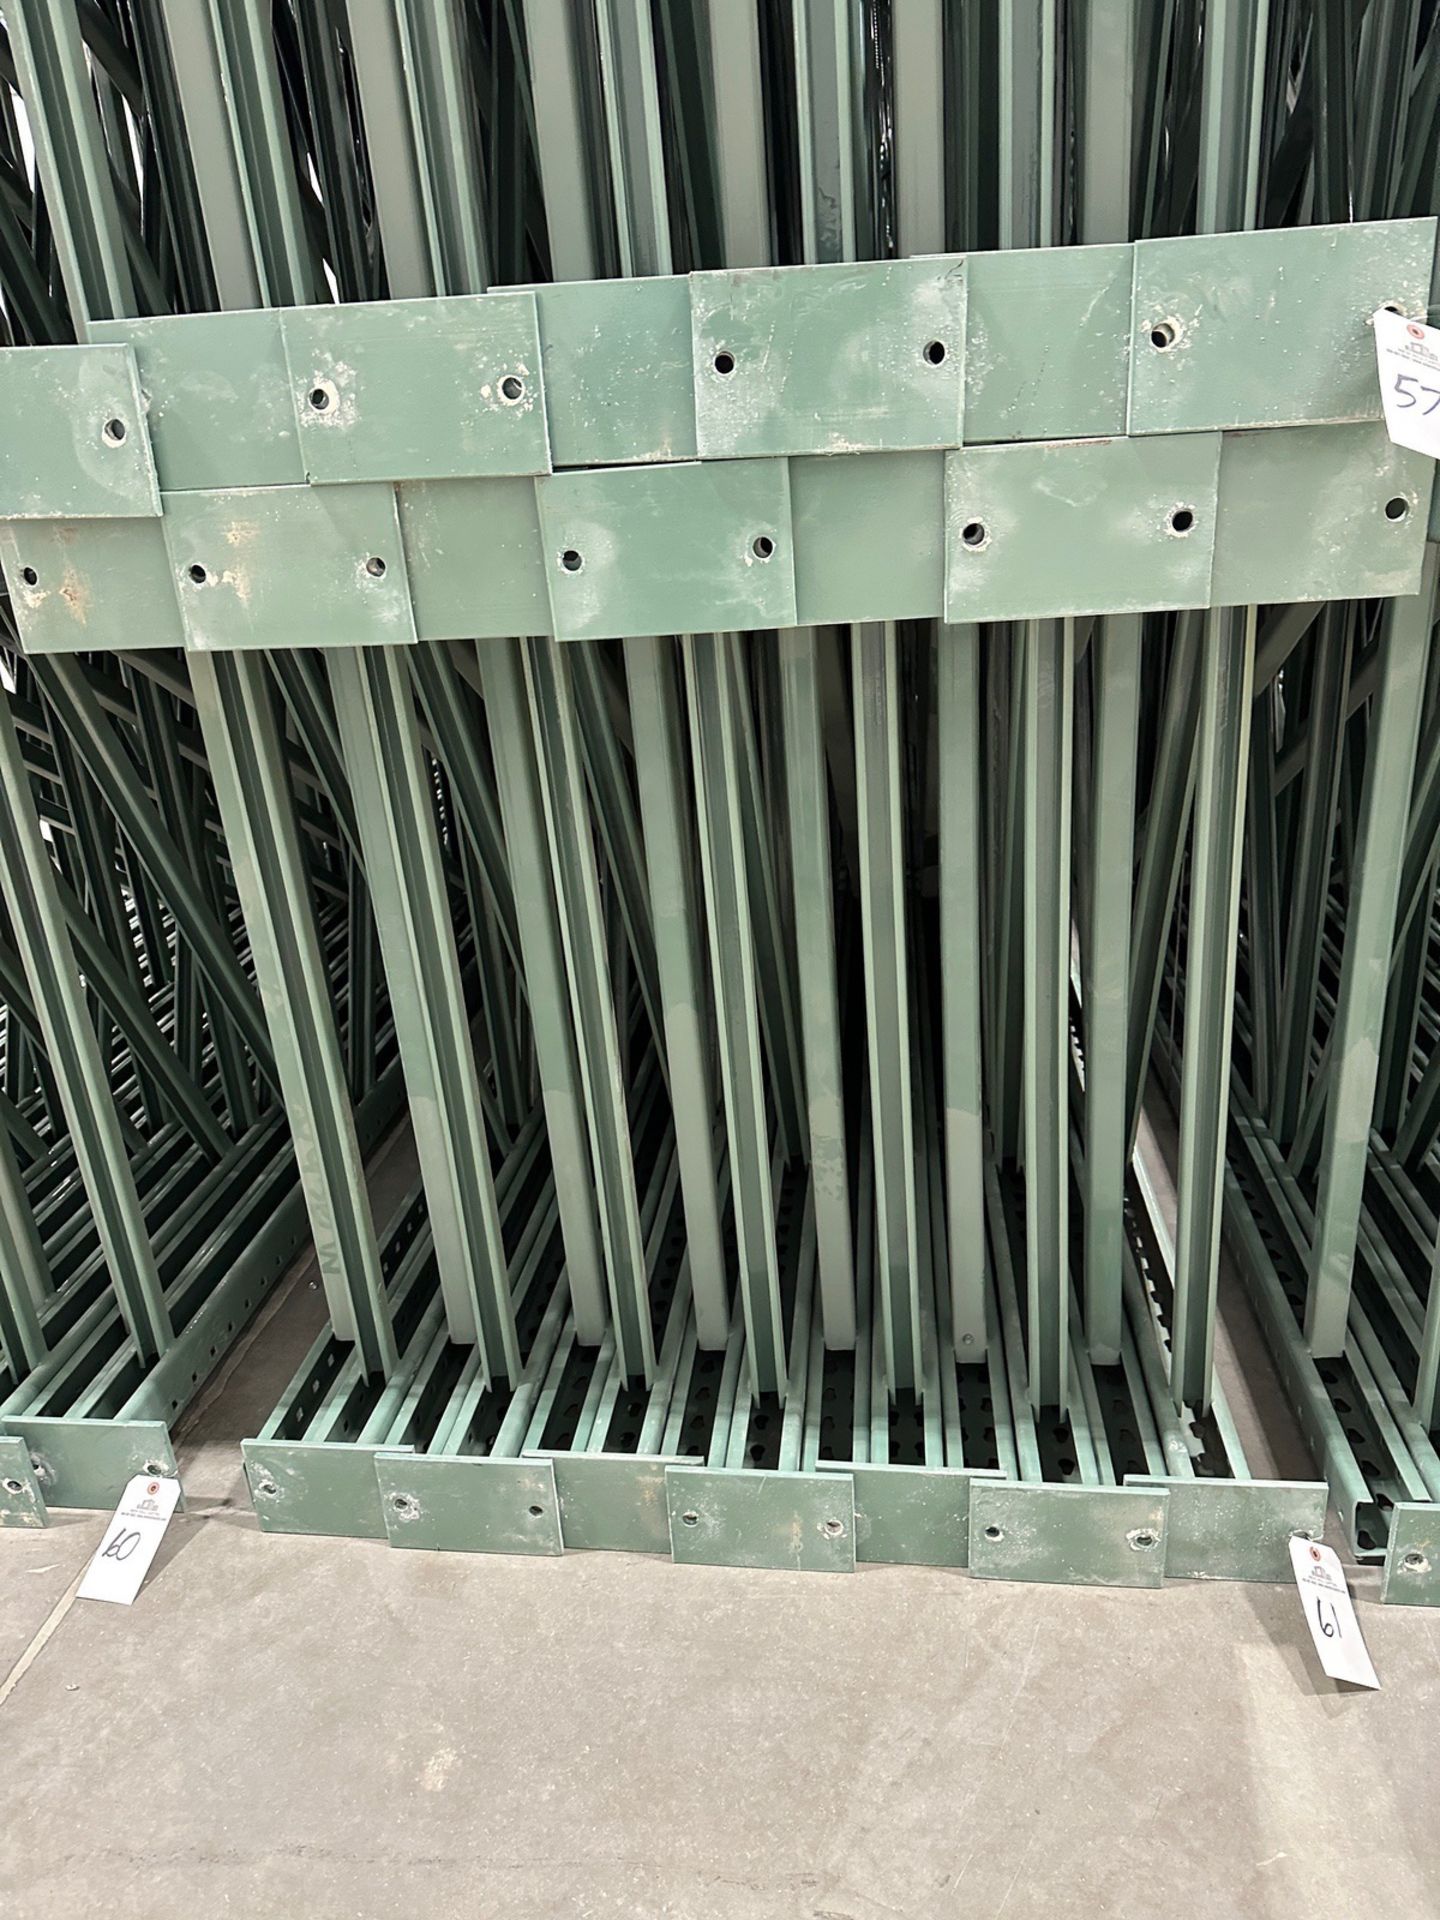 Interlake Mecalux 30' x 42" Teardrop Pallet Racking Uprights, 3x3 Columns | Rig Fee $100 - Image 3 of 3